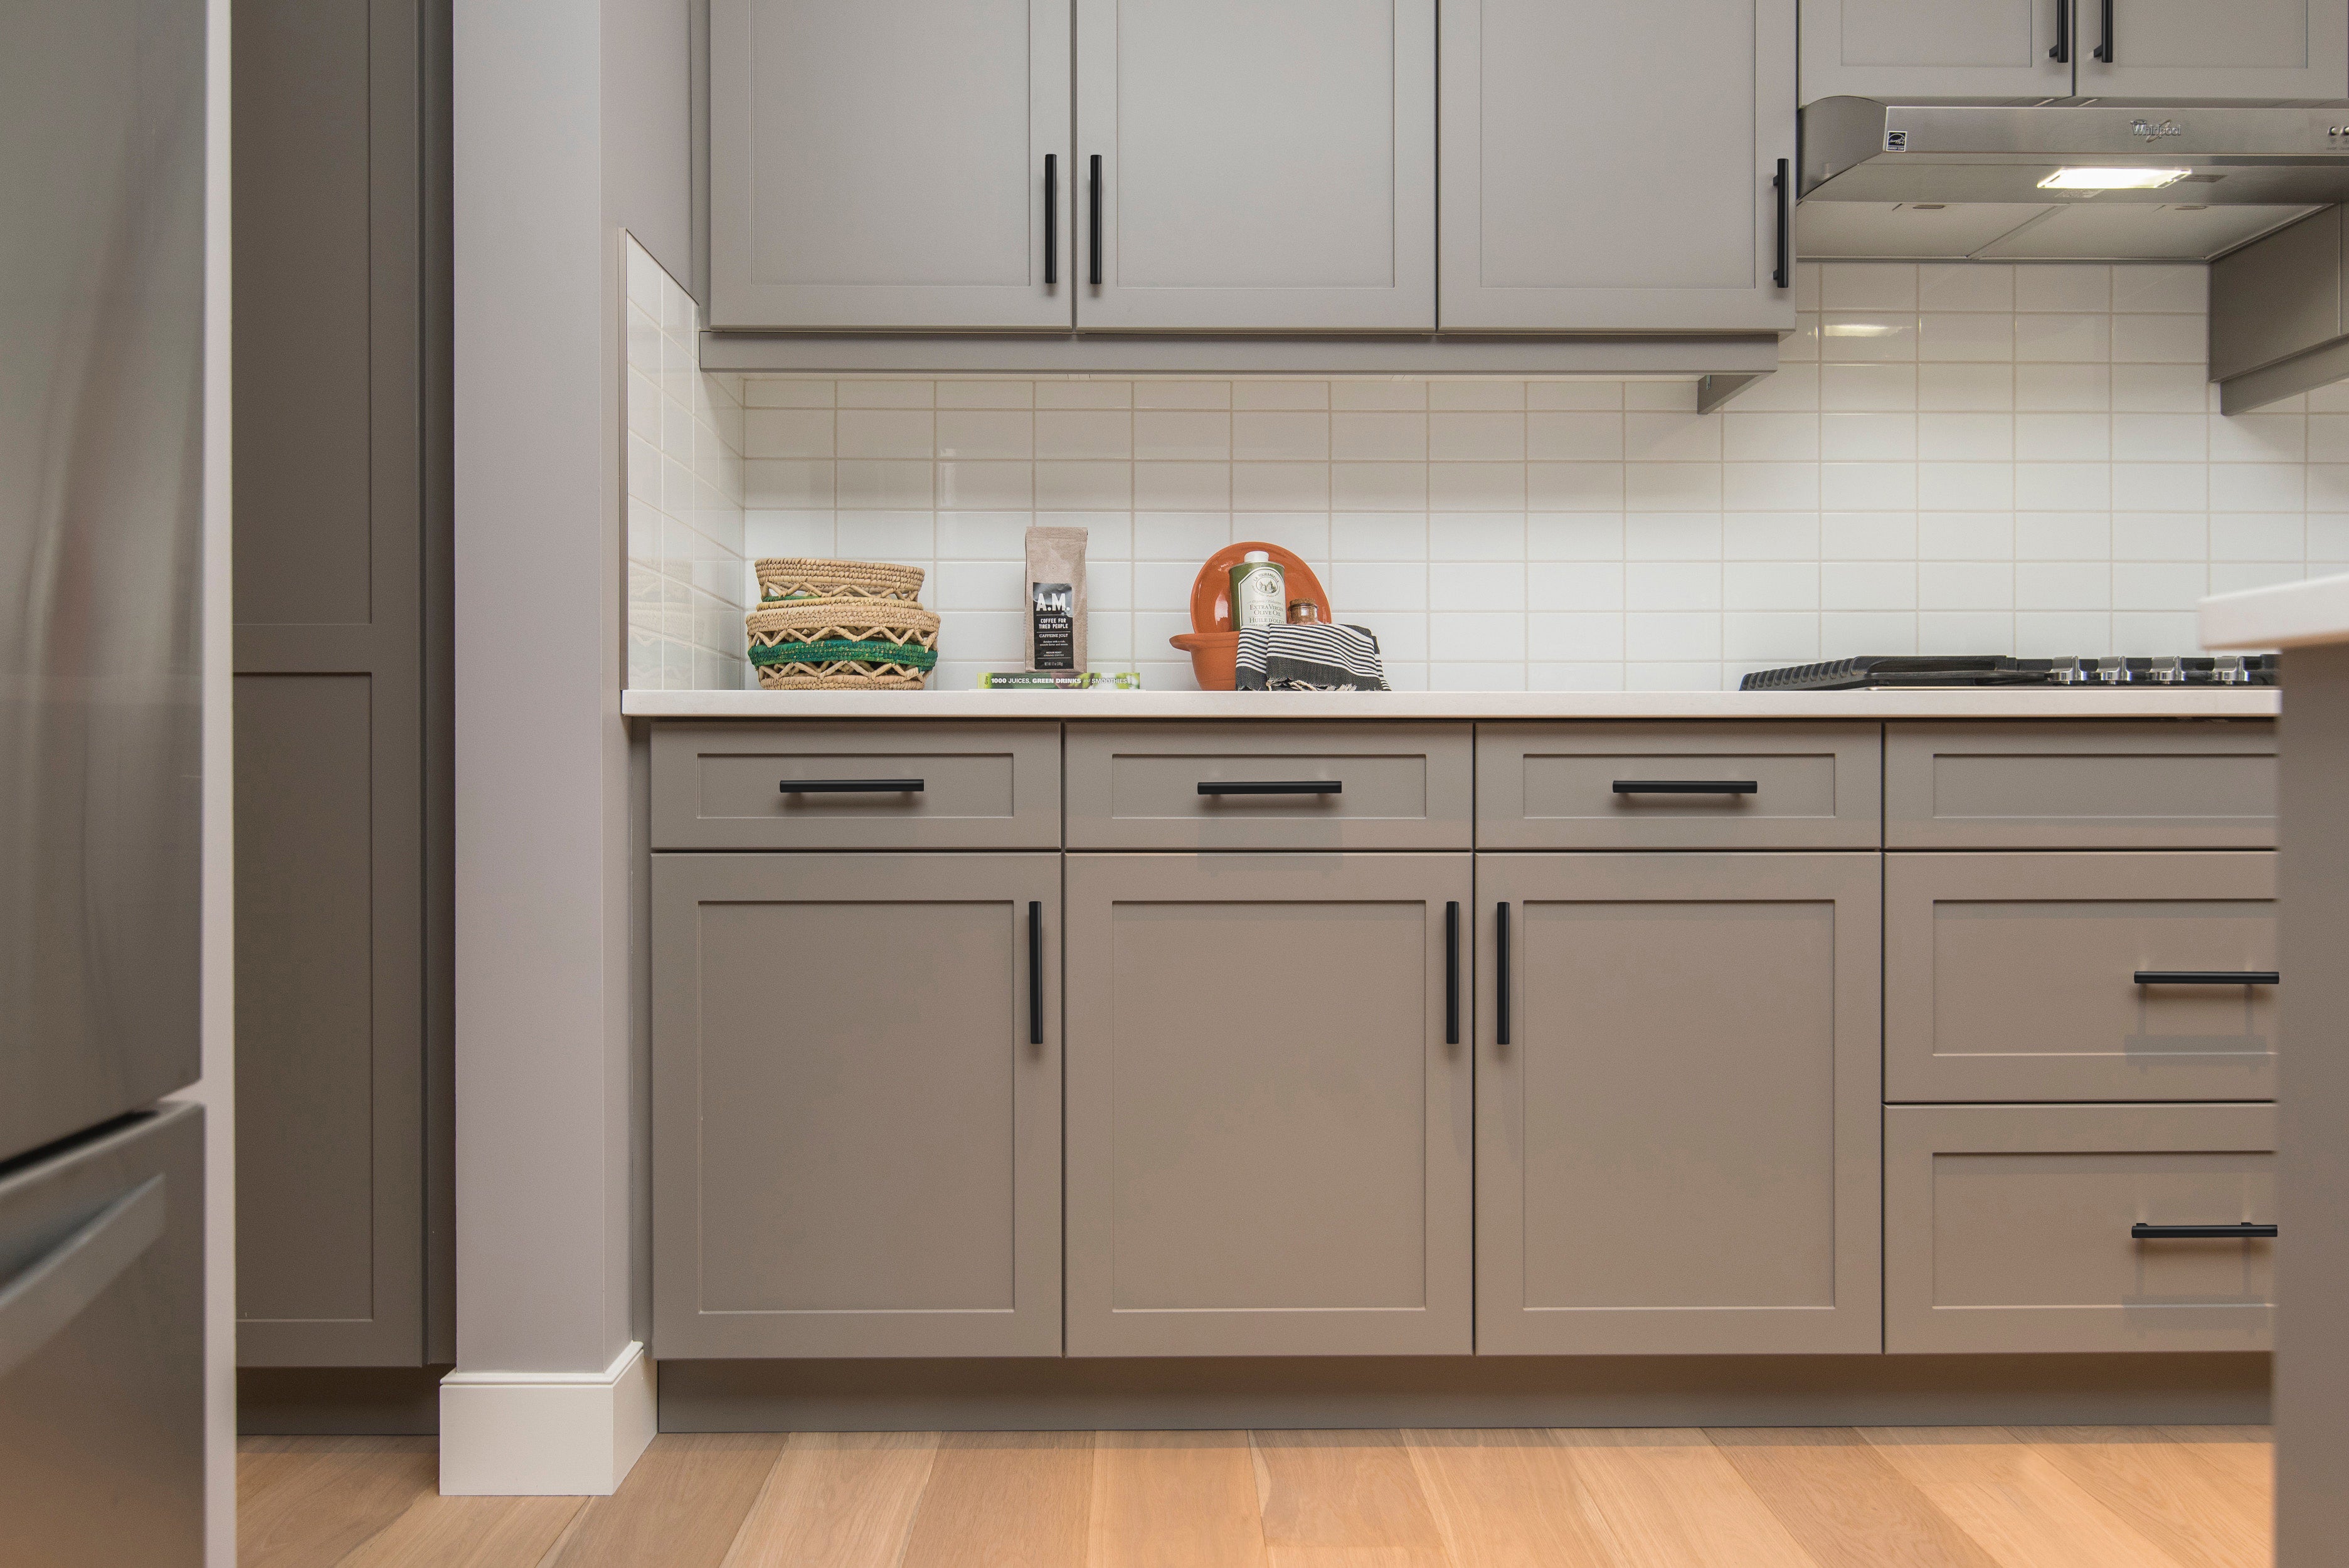 30 Pack | 5'' Cabinet Pulls Matte Black Stainless Steel Kitchen Drawer Pulls Cabinet Handles 5”Length, 3” Hole Center